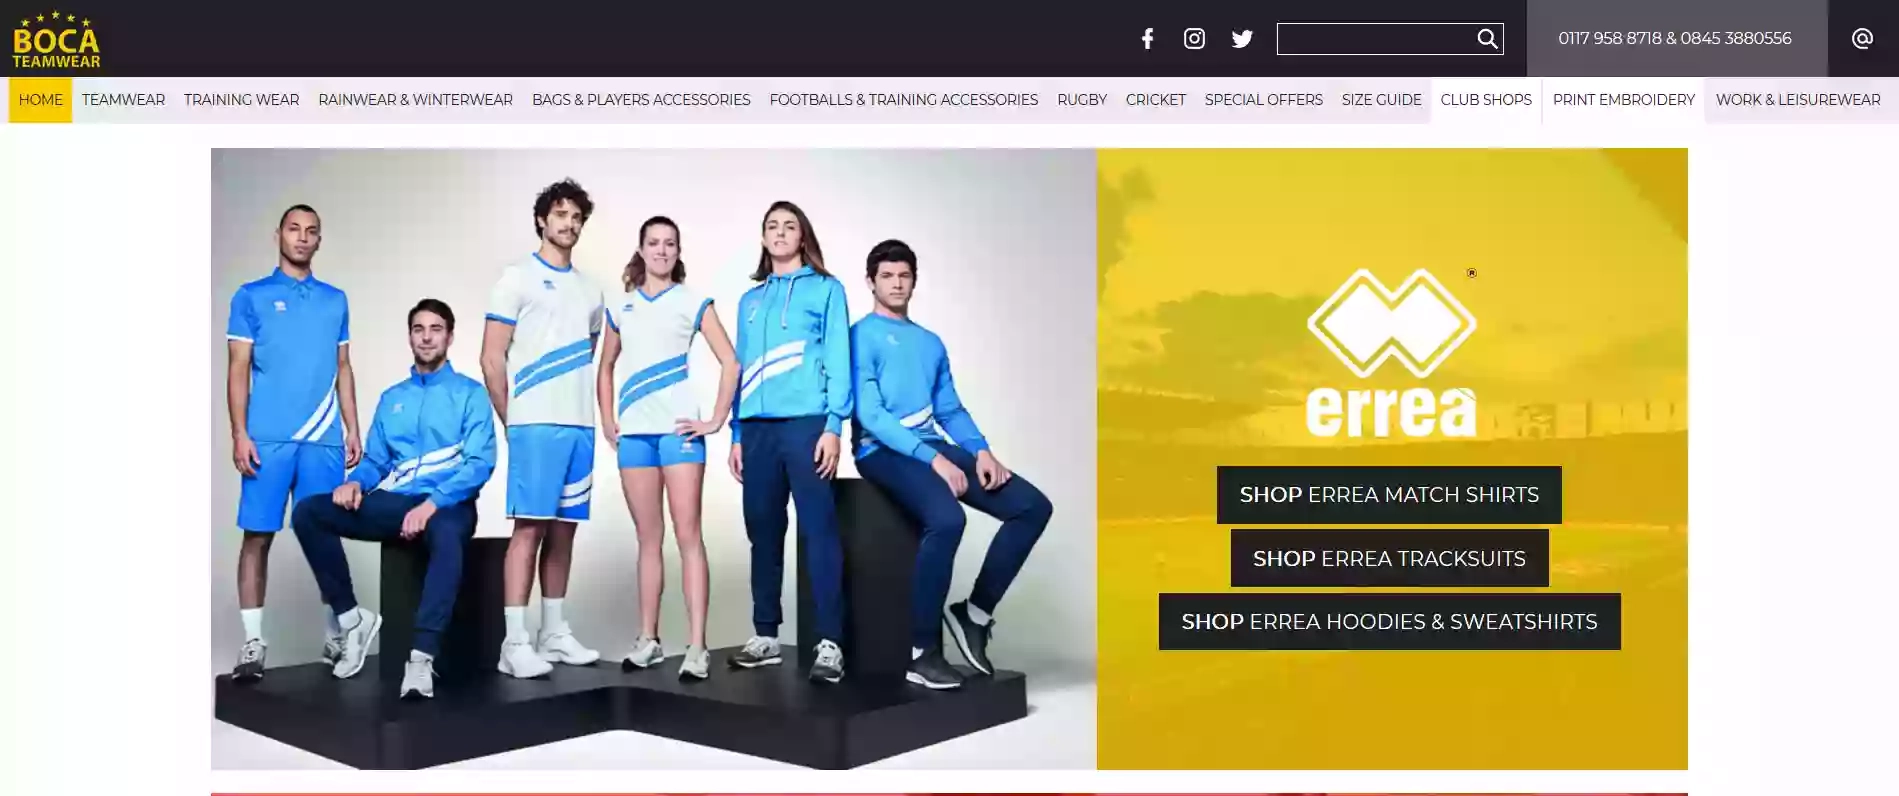 Boca Teamwear Ltd